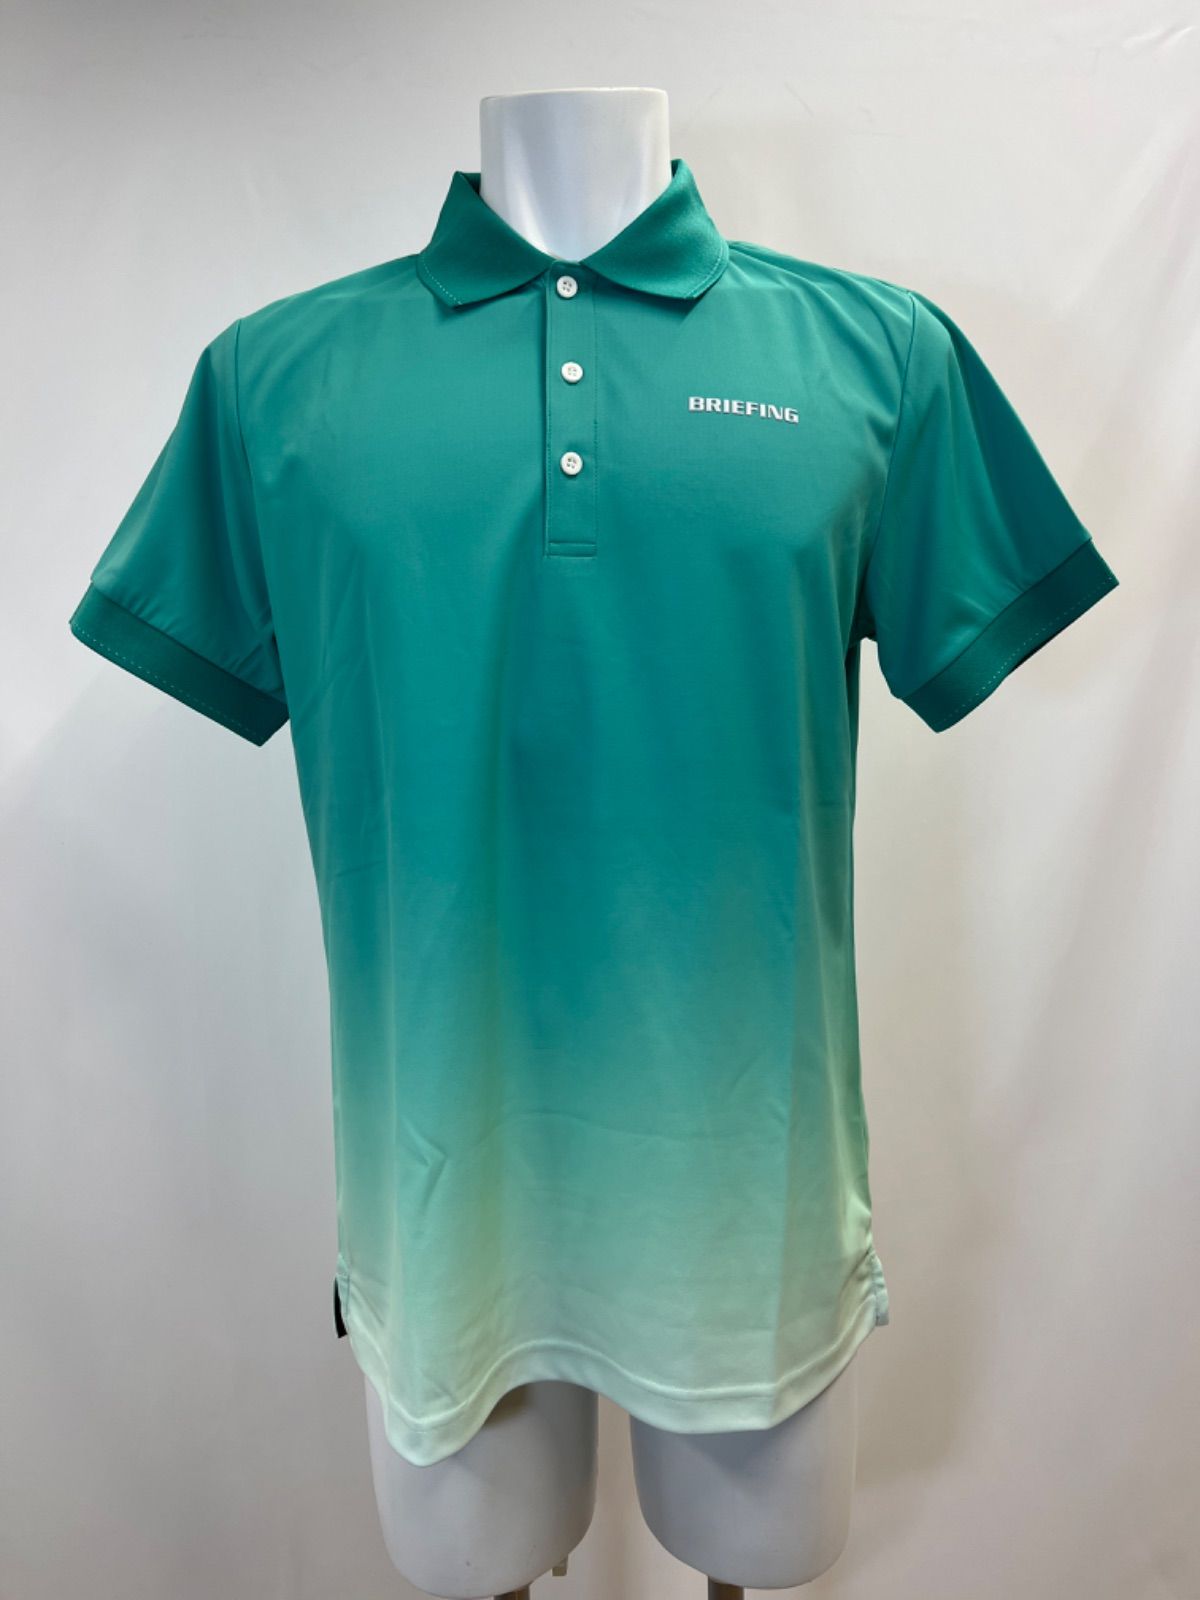 BRIEFING ポロシャツ ゴルフウェア Lサイズ - 林商店 - メルカリ